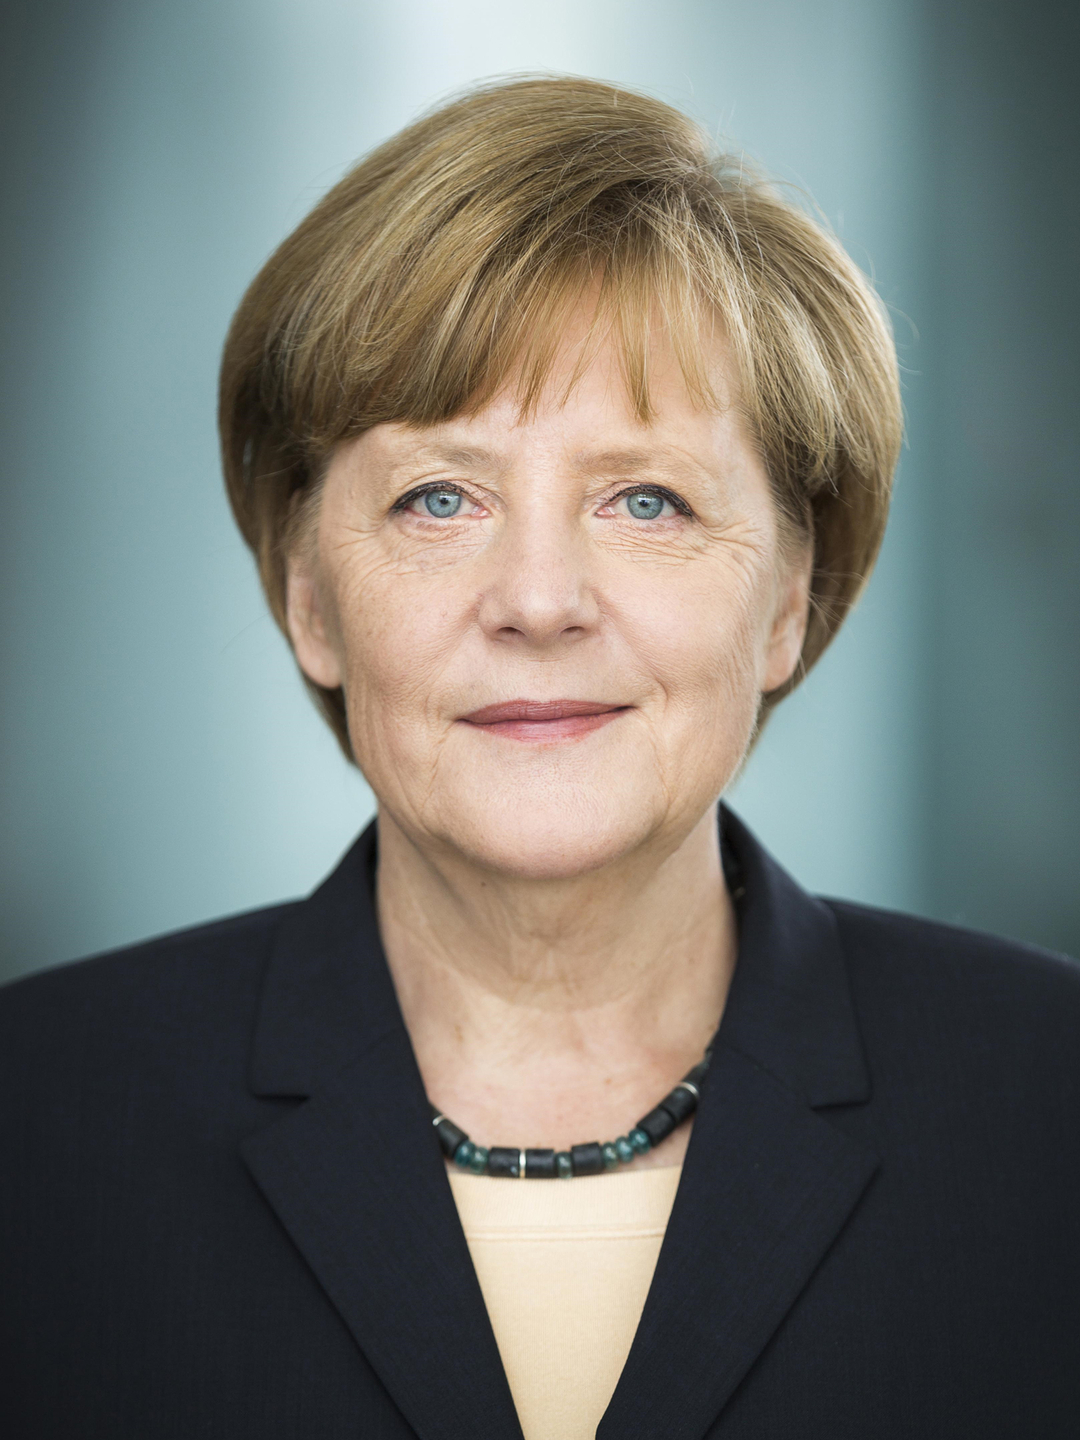 Angela Merkel place of birth